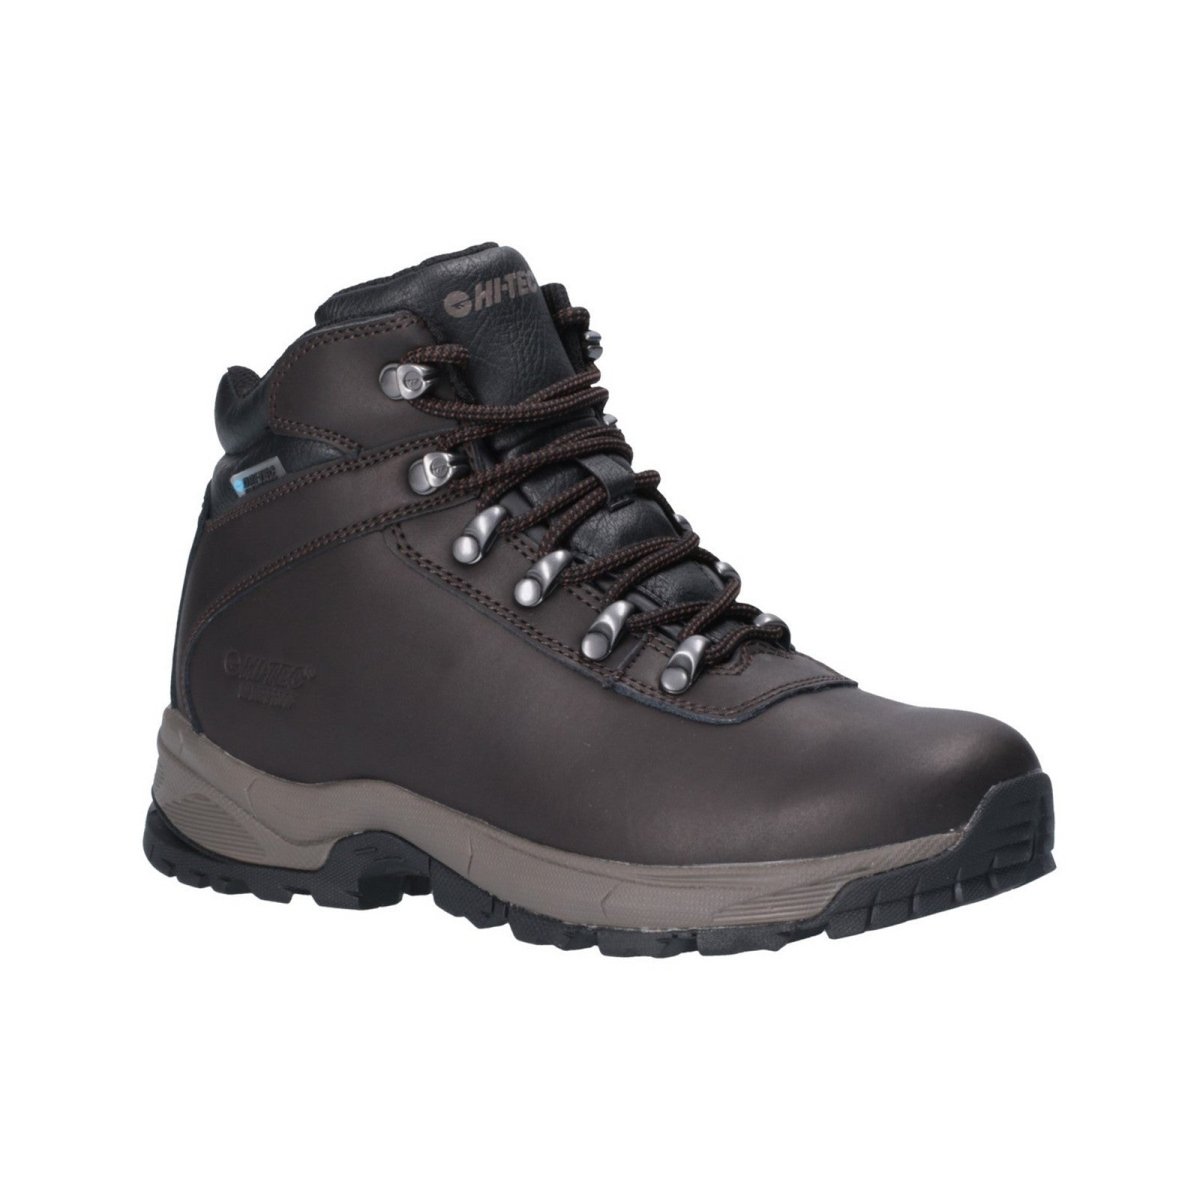 Hi-Tec Eurotrek Lite Waterproof Ladies Hiking Boots - Shoe Store Direct